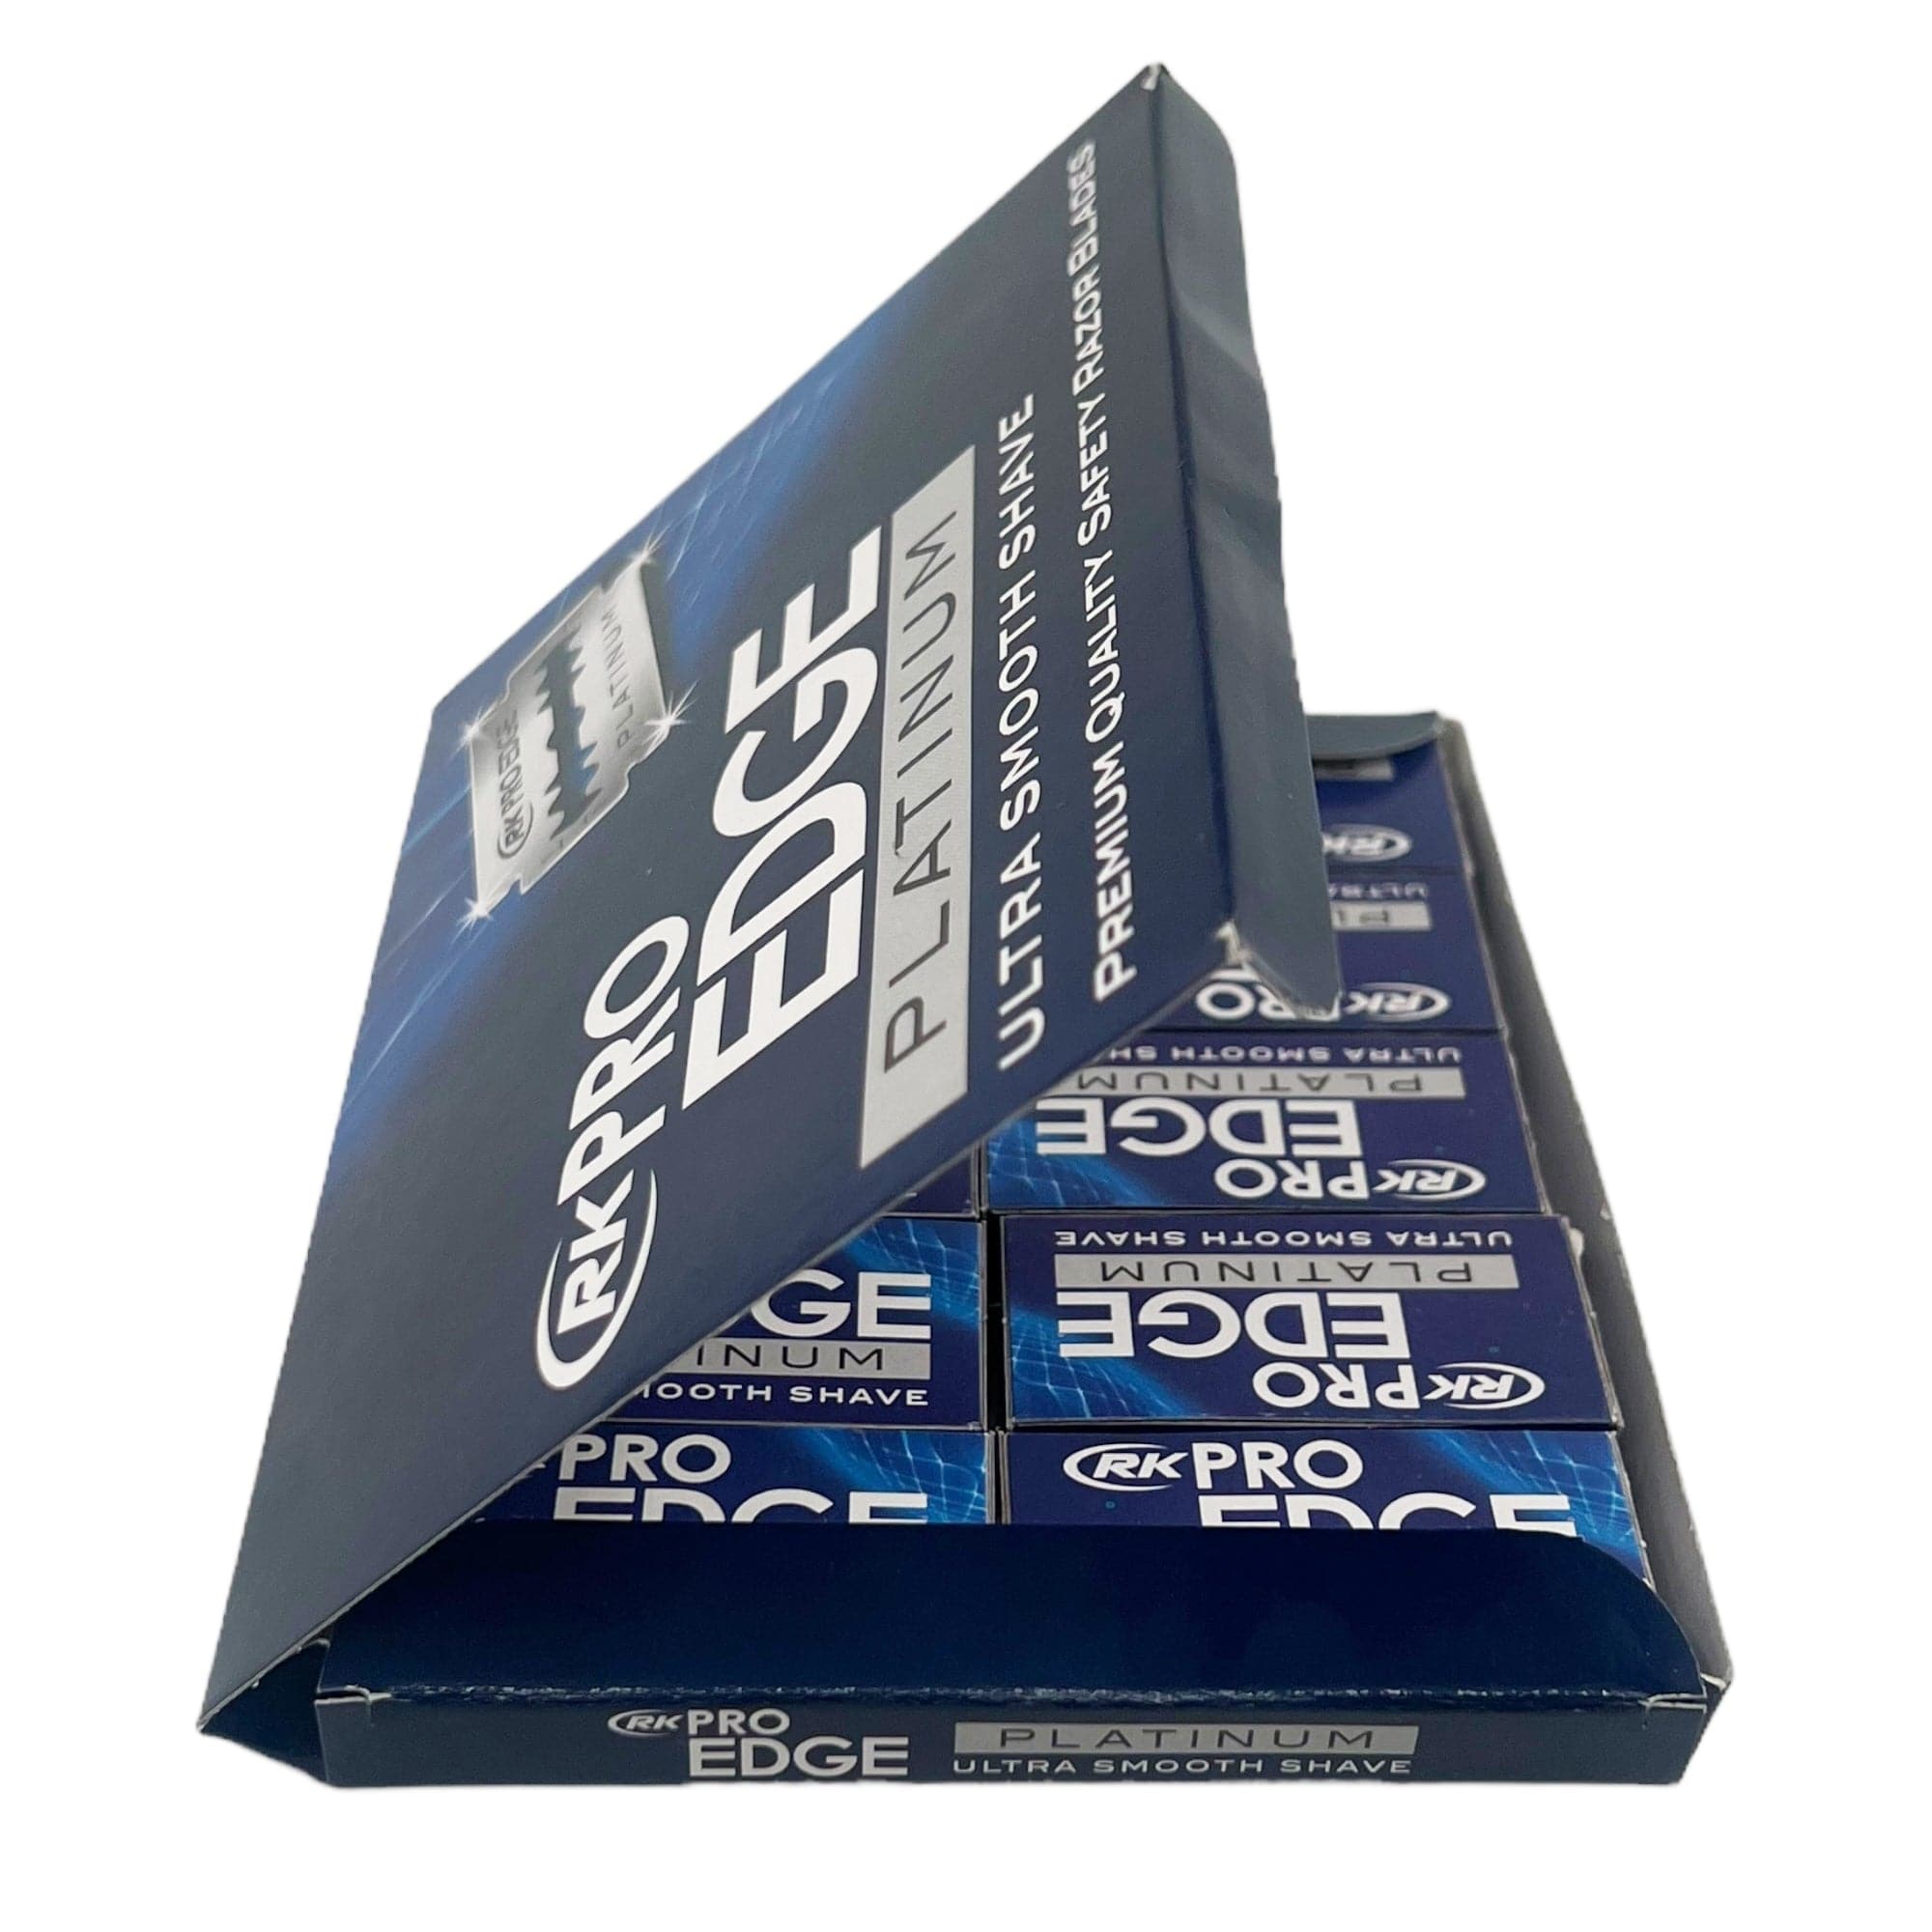 RK Pro Edge - Platinum Super Stainless Double Edge Razor Blade 10x10pcs